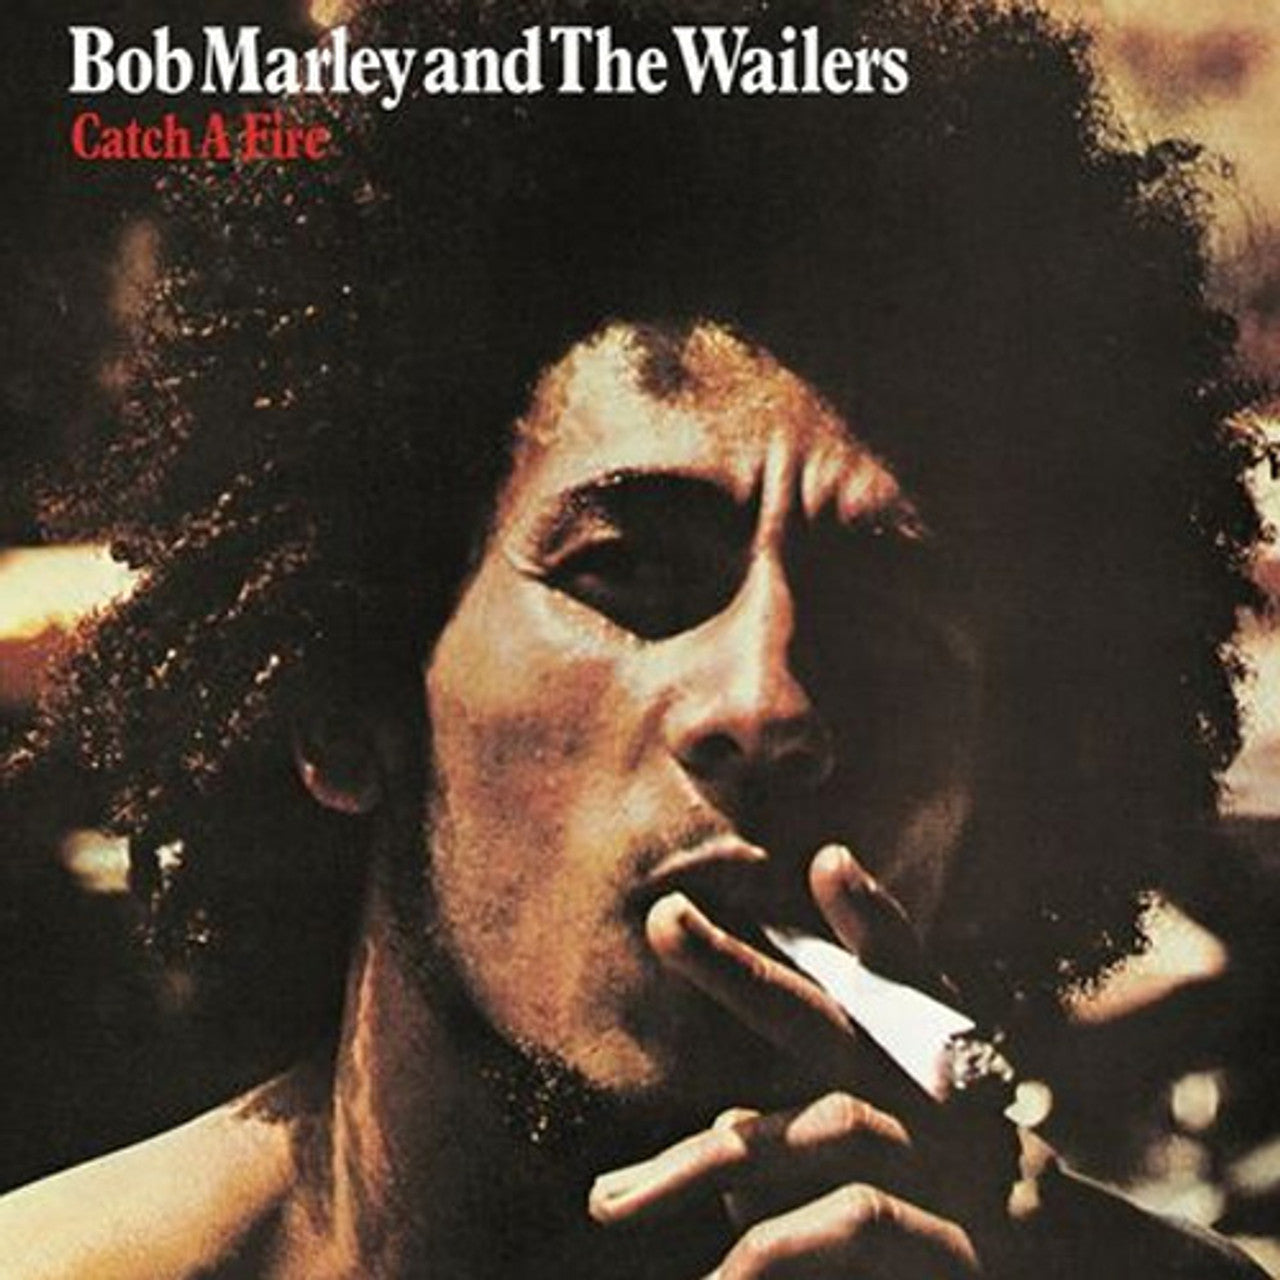 Bob Marley &amp; the Wailers - Catch a Fire - Tuff Gong LP